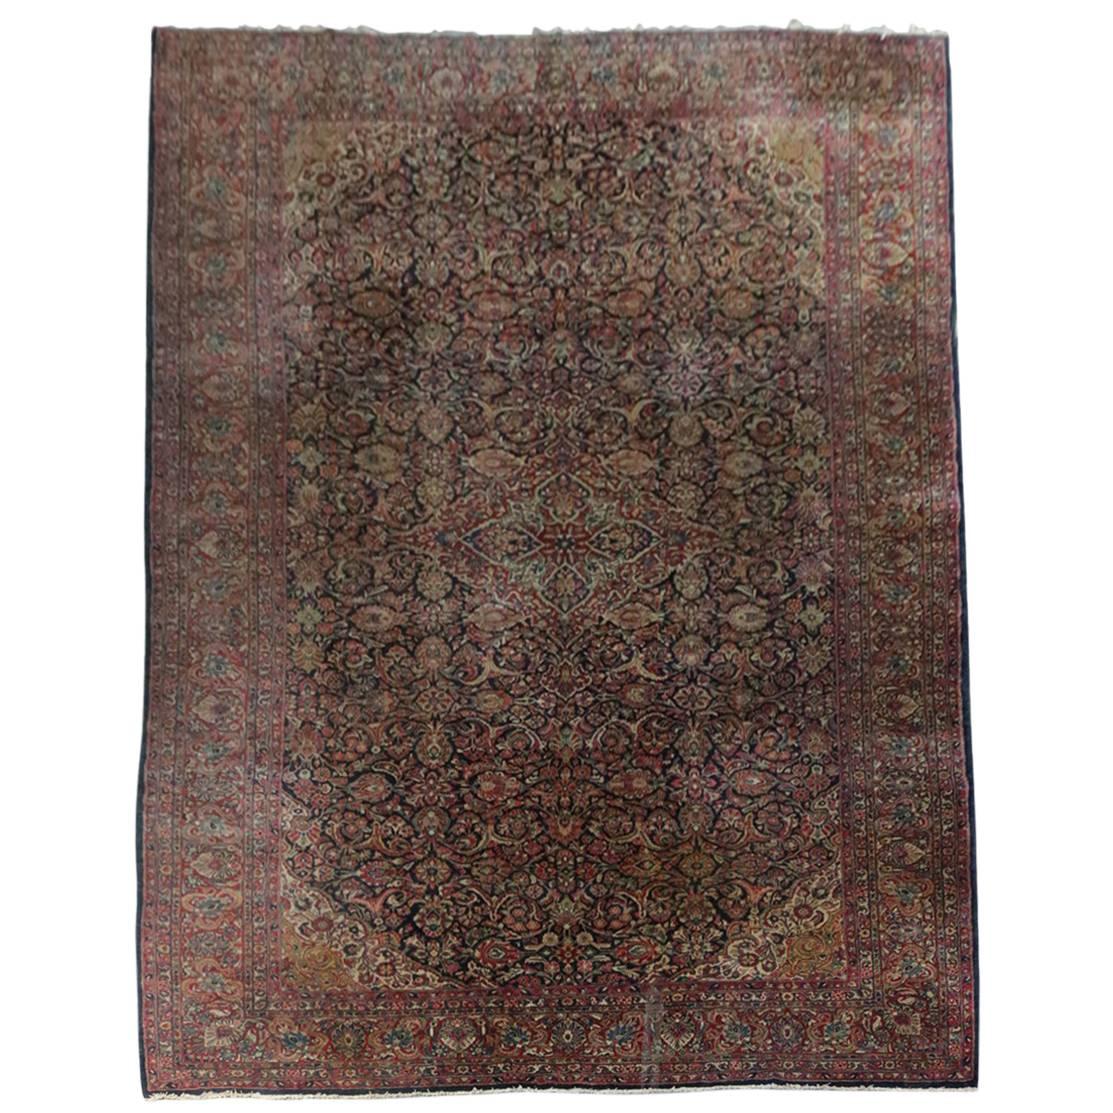 Antique Palace Size Hand-Knotted Wool Sarouk Persian Carpet, circa 1930